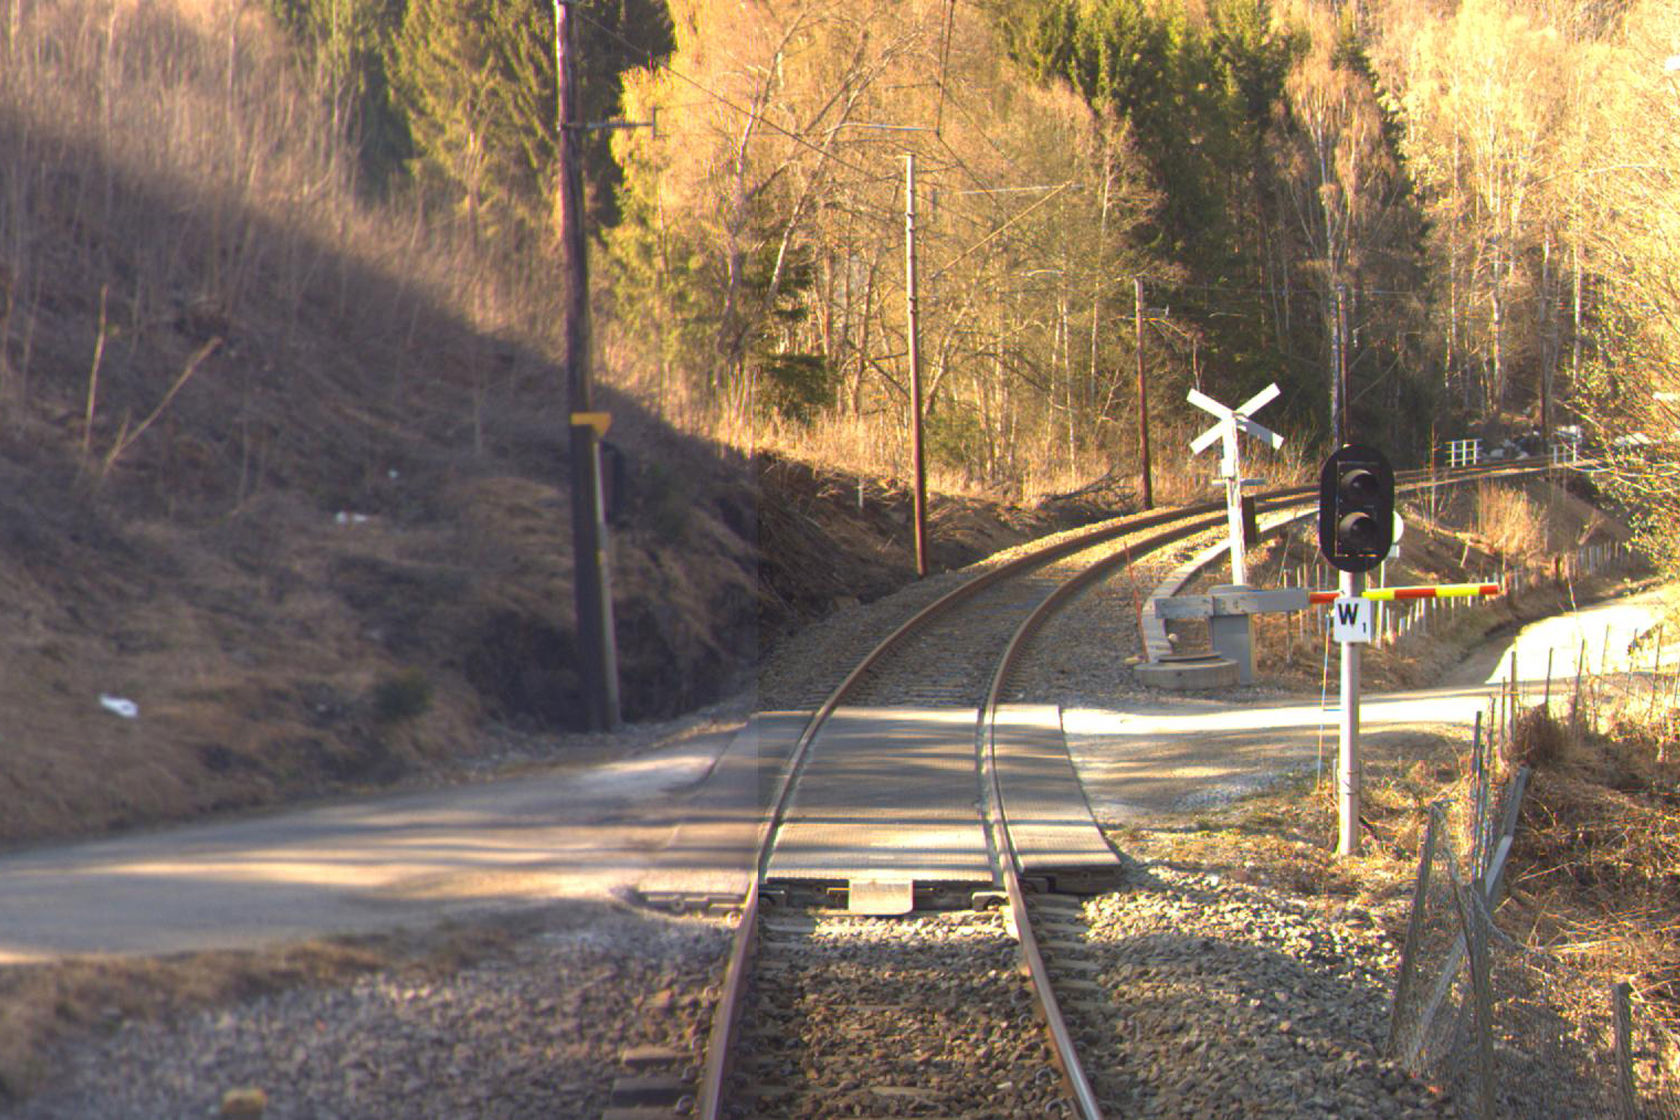 Tracks at Viul station